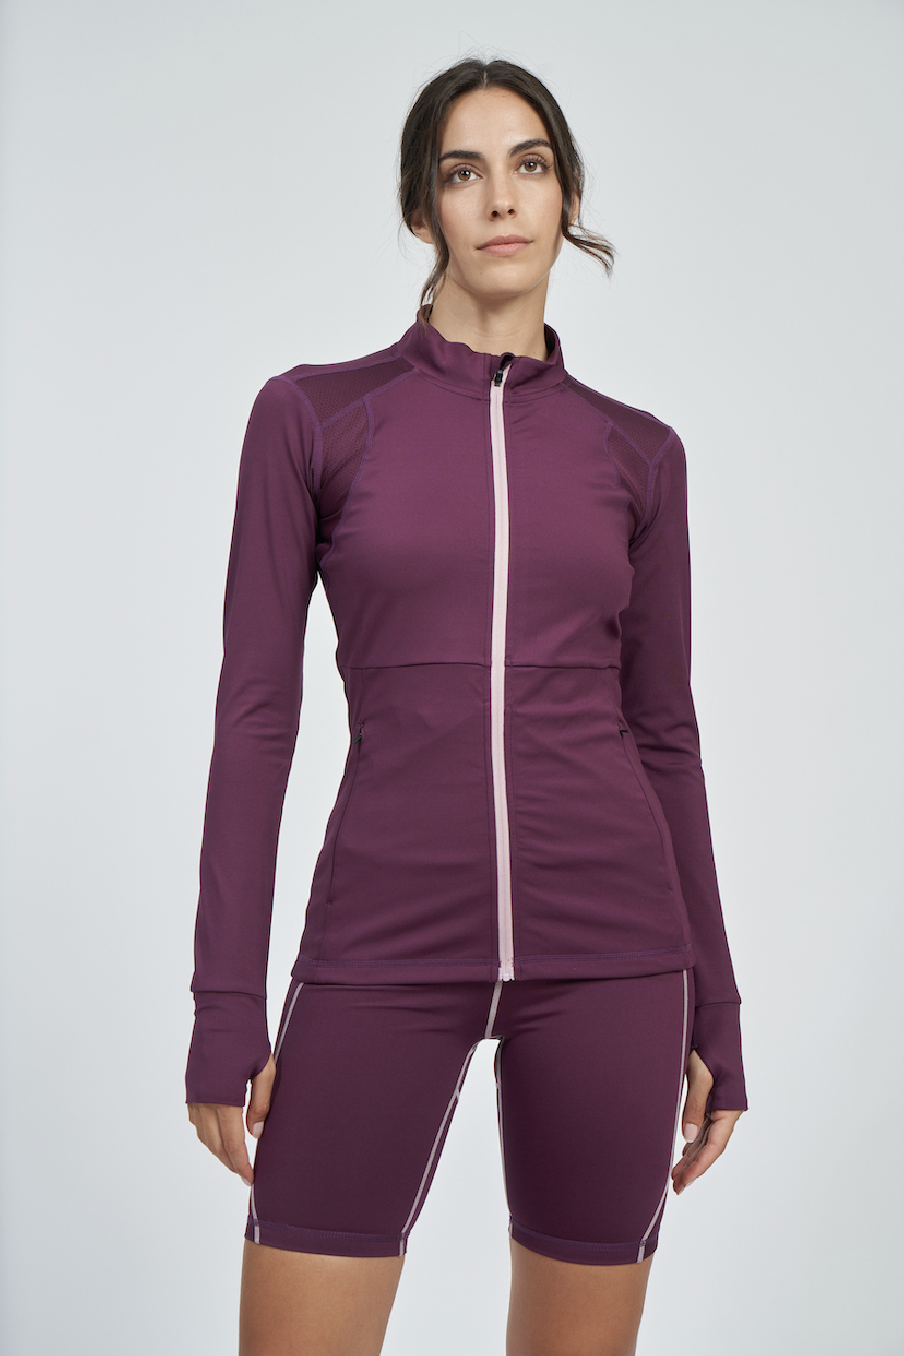 https://umbro.es/20208-home_default/chaqueta-umbro-pro-training-jacket-womens-potent-purple-mauve-shadows.jpg